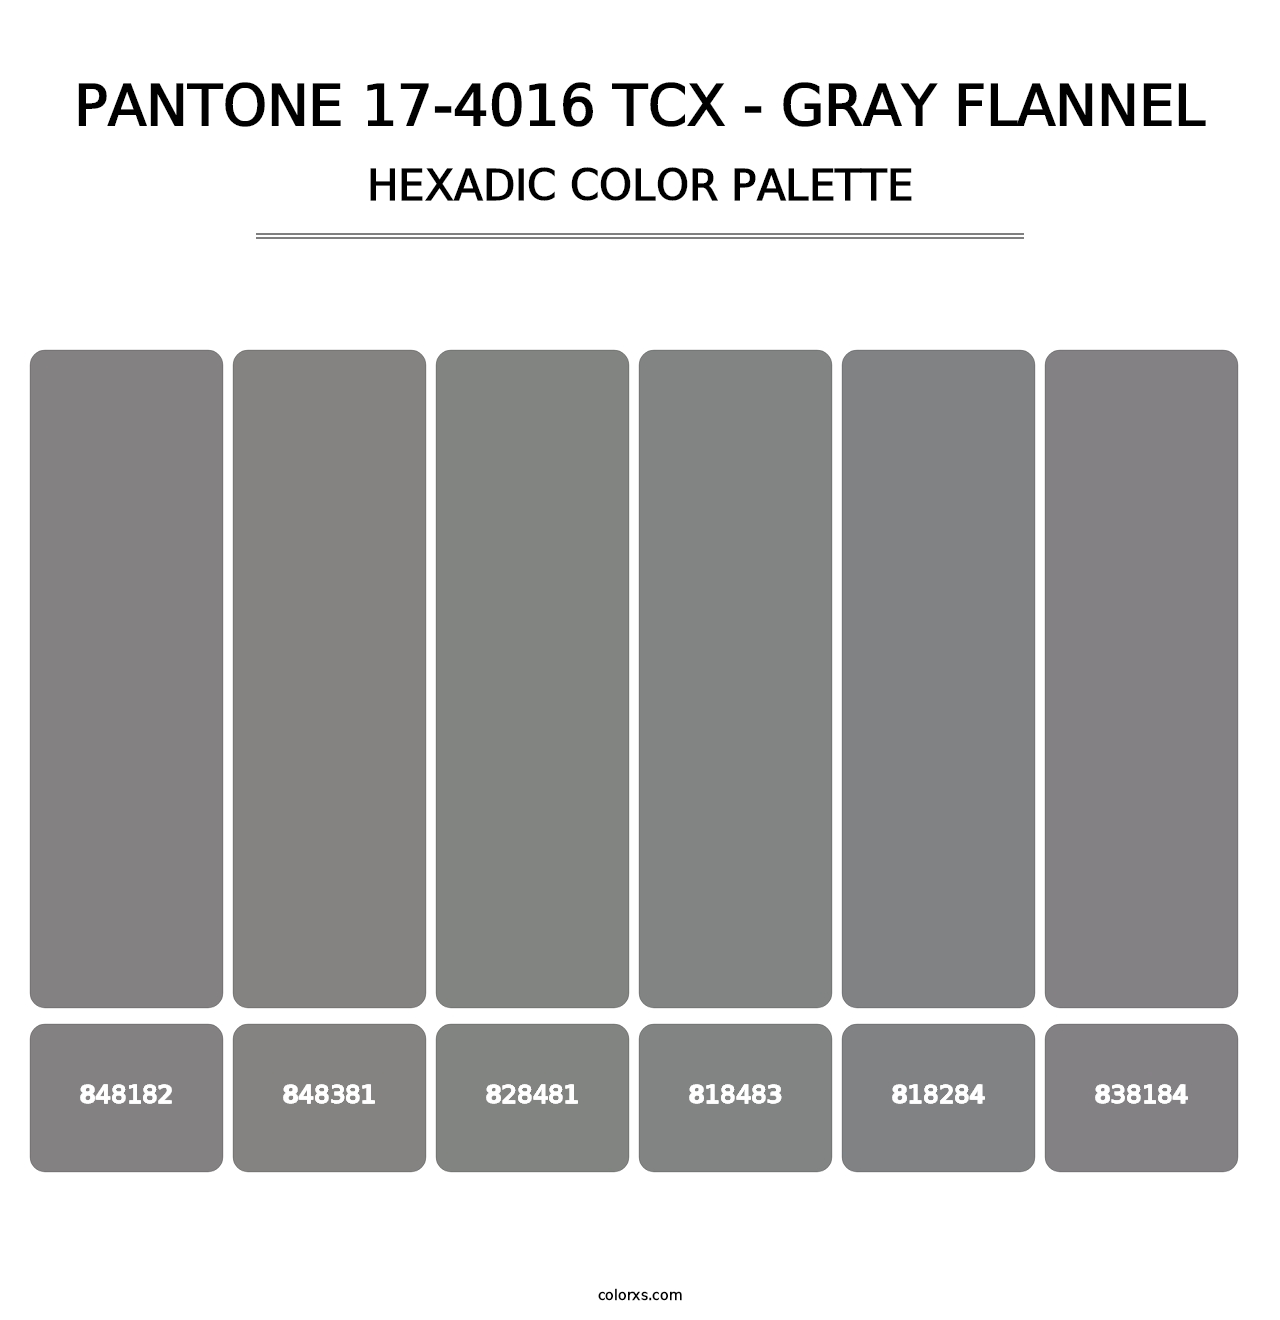 PANTONE 17-4016 TCX - Gray Flannel - Hexadic Color Palette